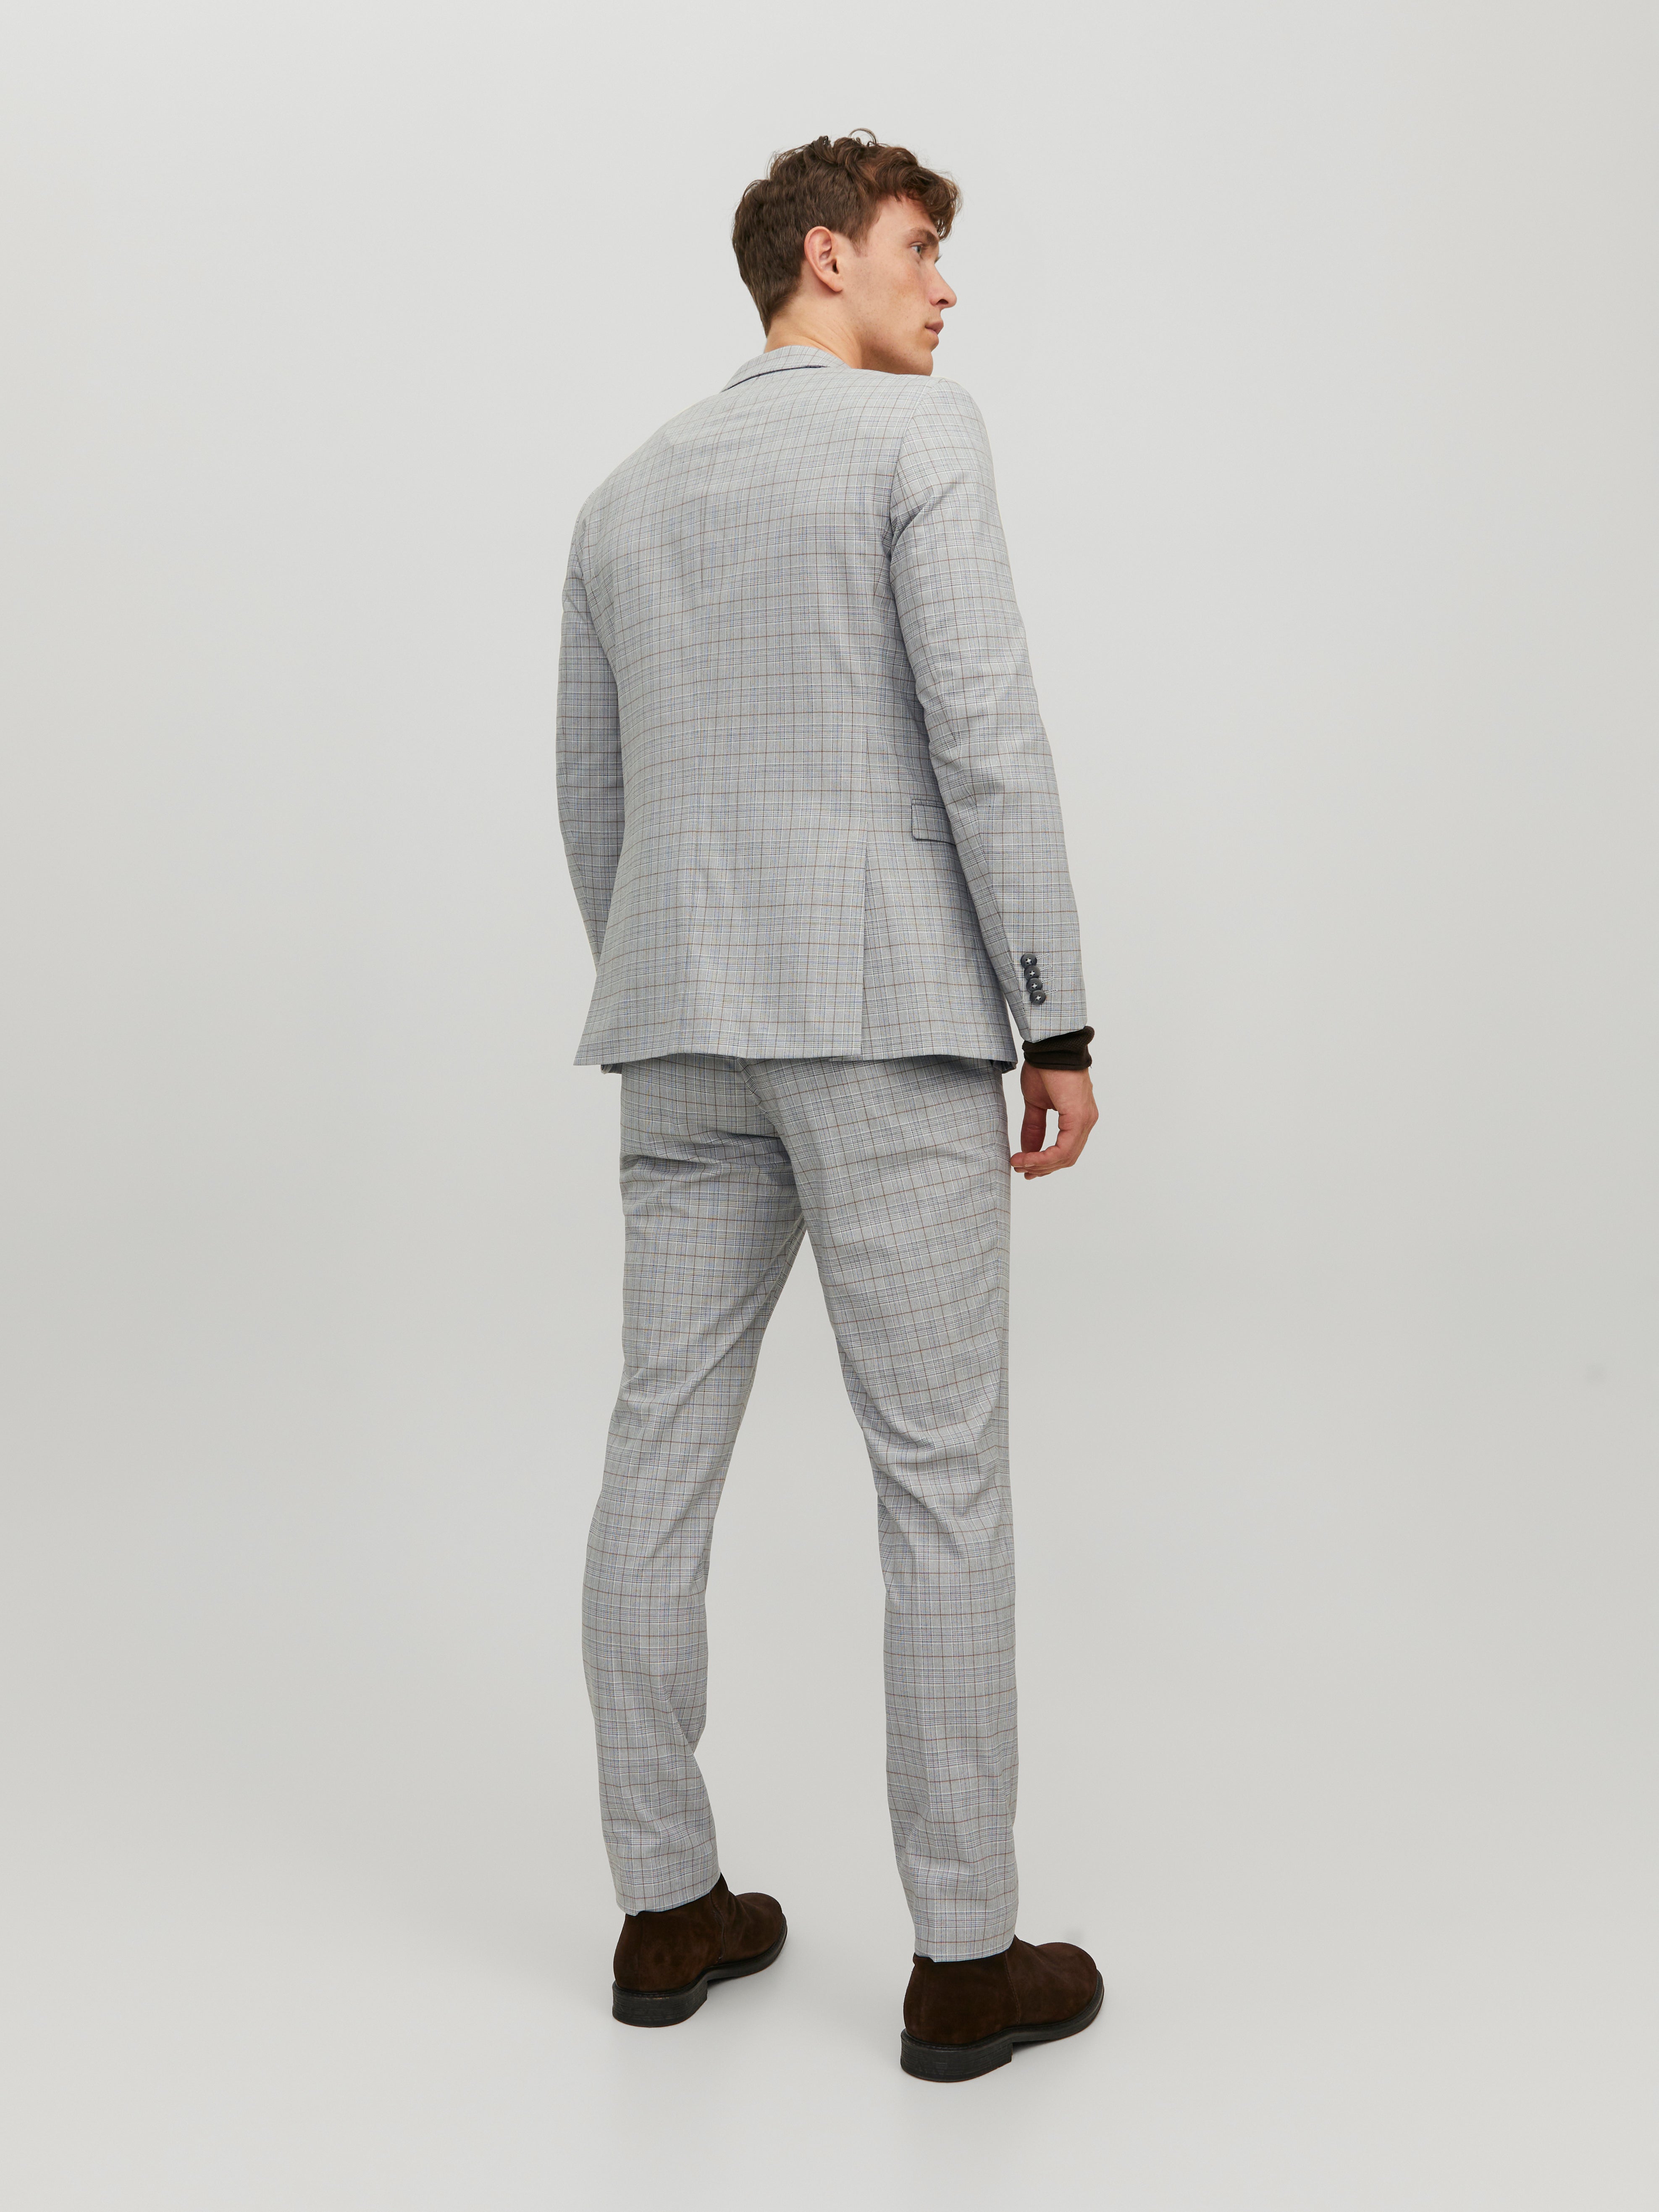 JPRSOLARIS Super Slim Fit Blazer with 20% discount! | Jack & Jones®